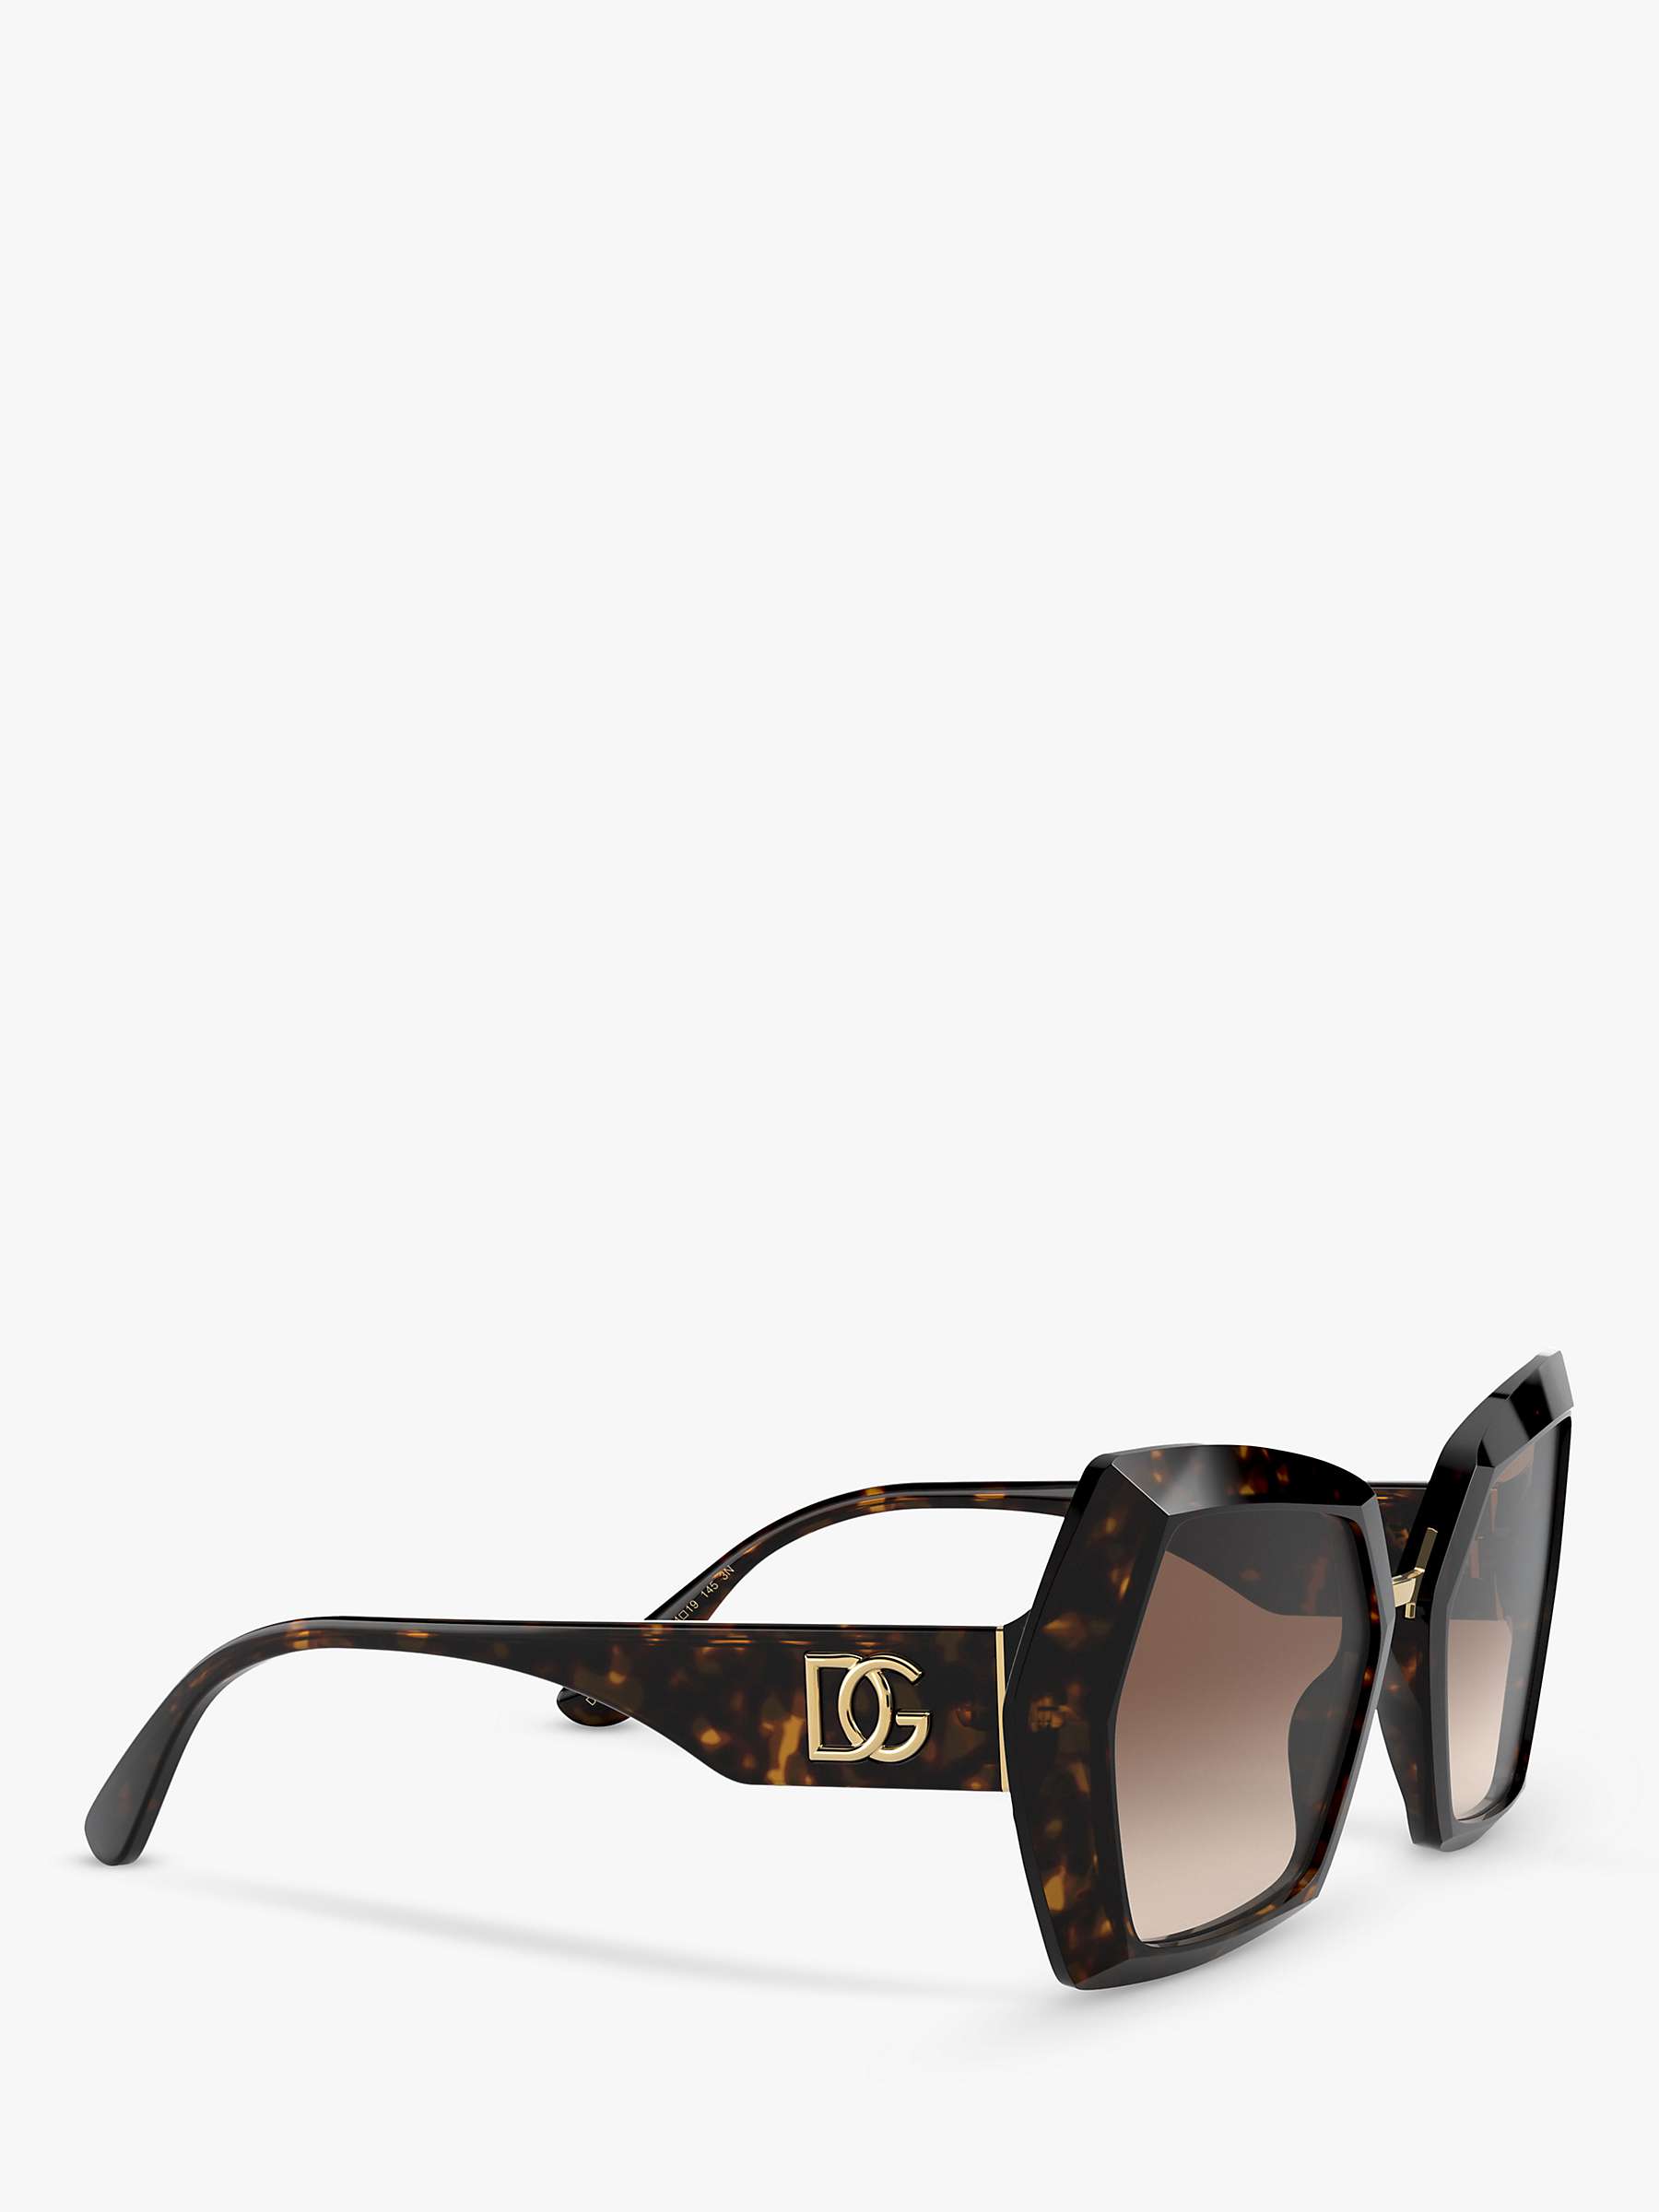 Buy Dolce & Gabbana DG4377 Women's Butterfly Sunglasses, Havana Online at johnlewis.com